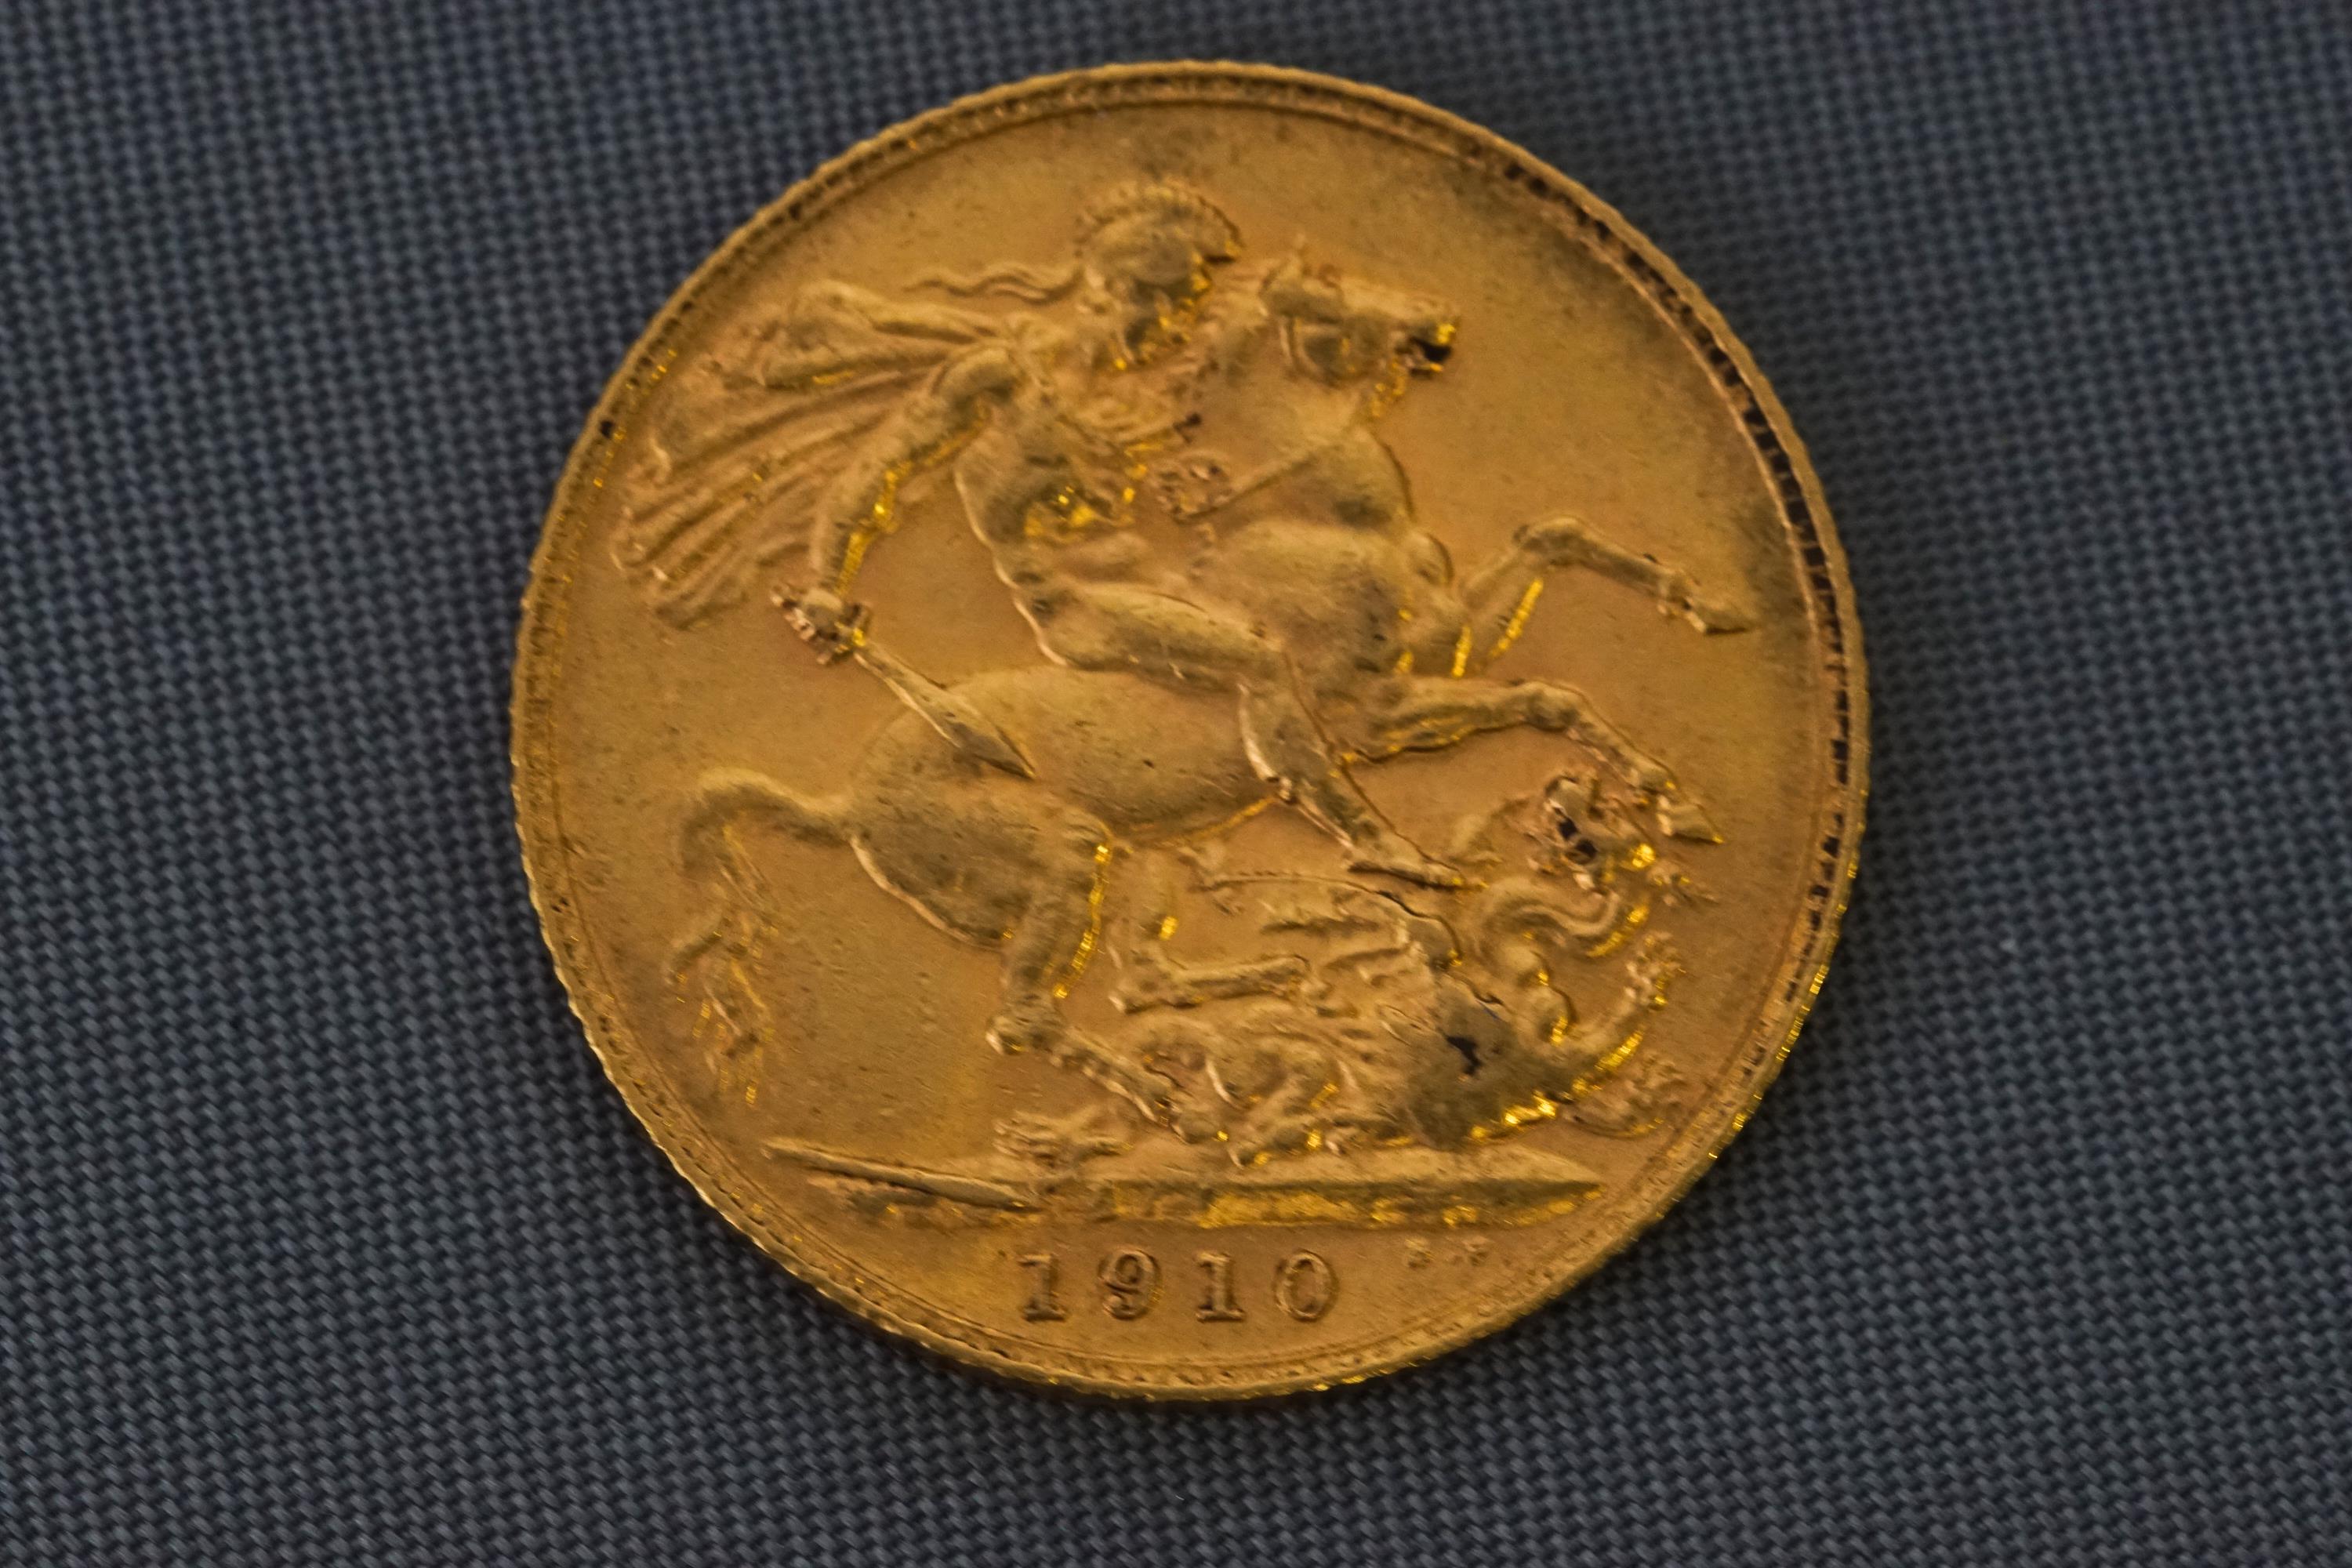 A 1910 full Sovereign 8 grams